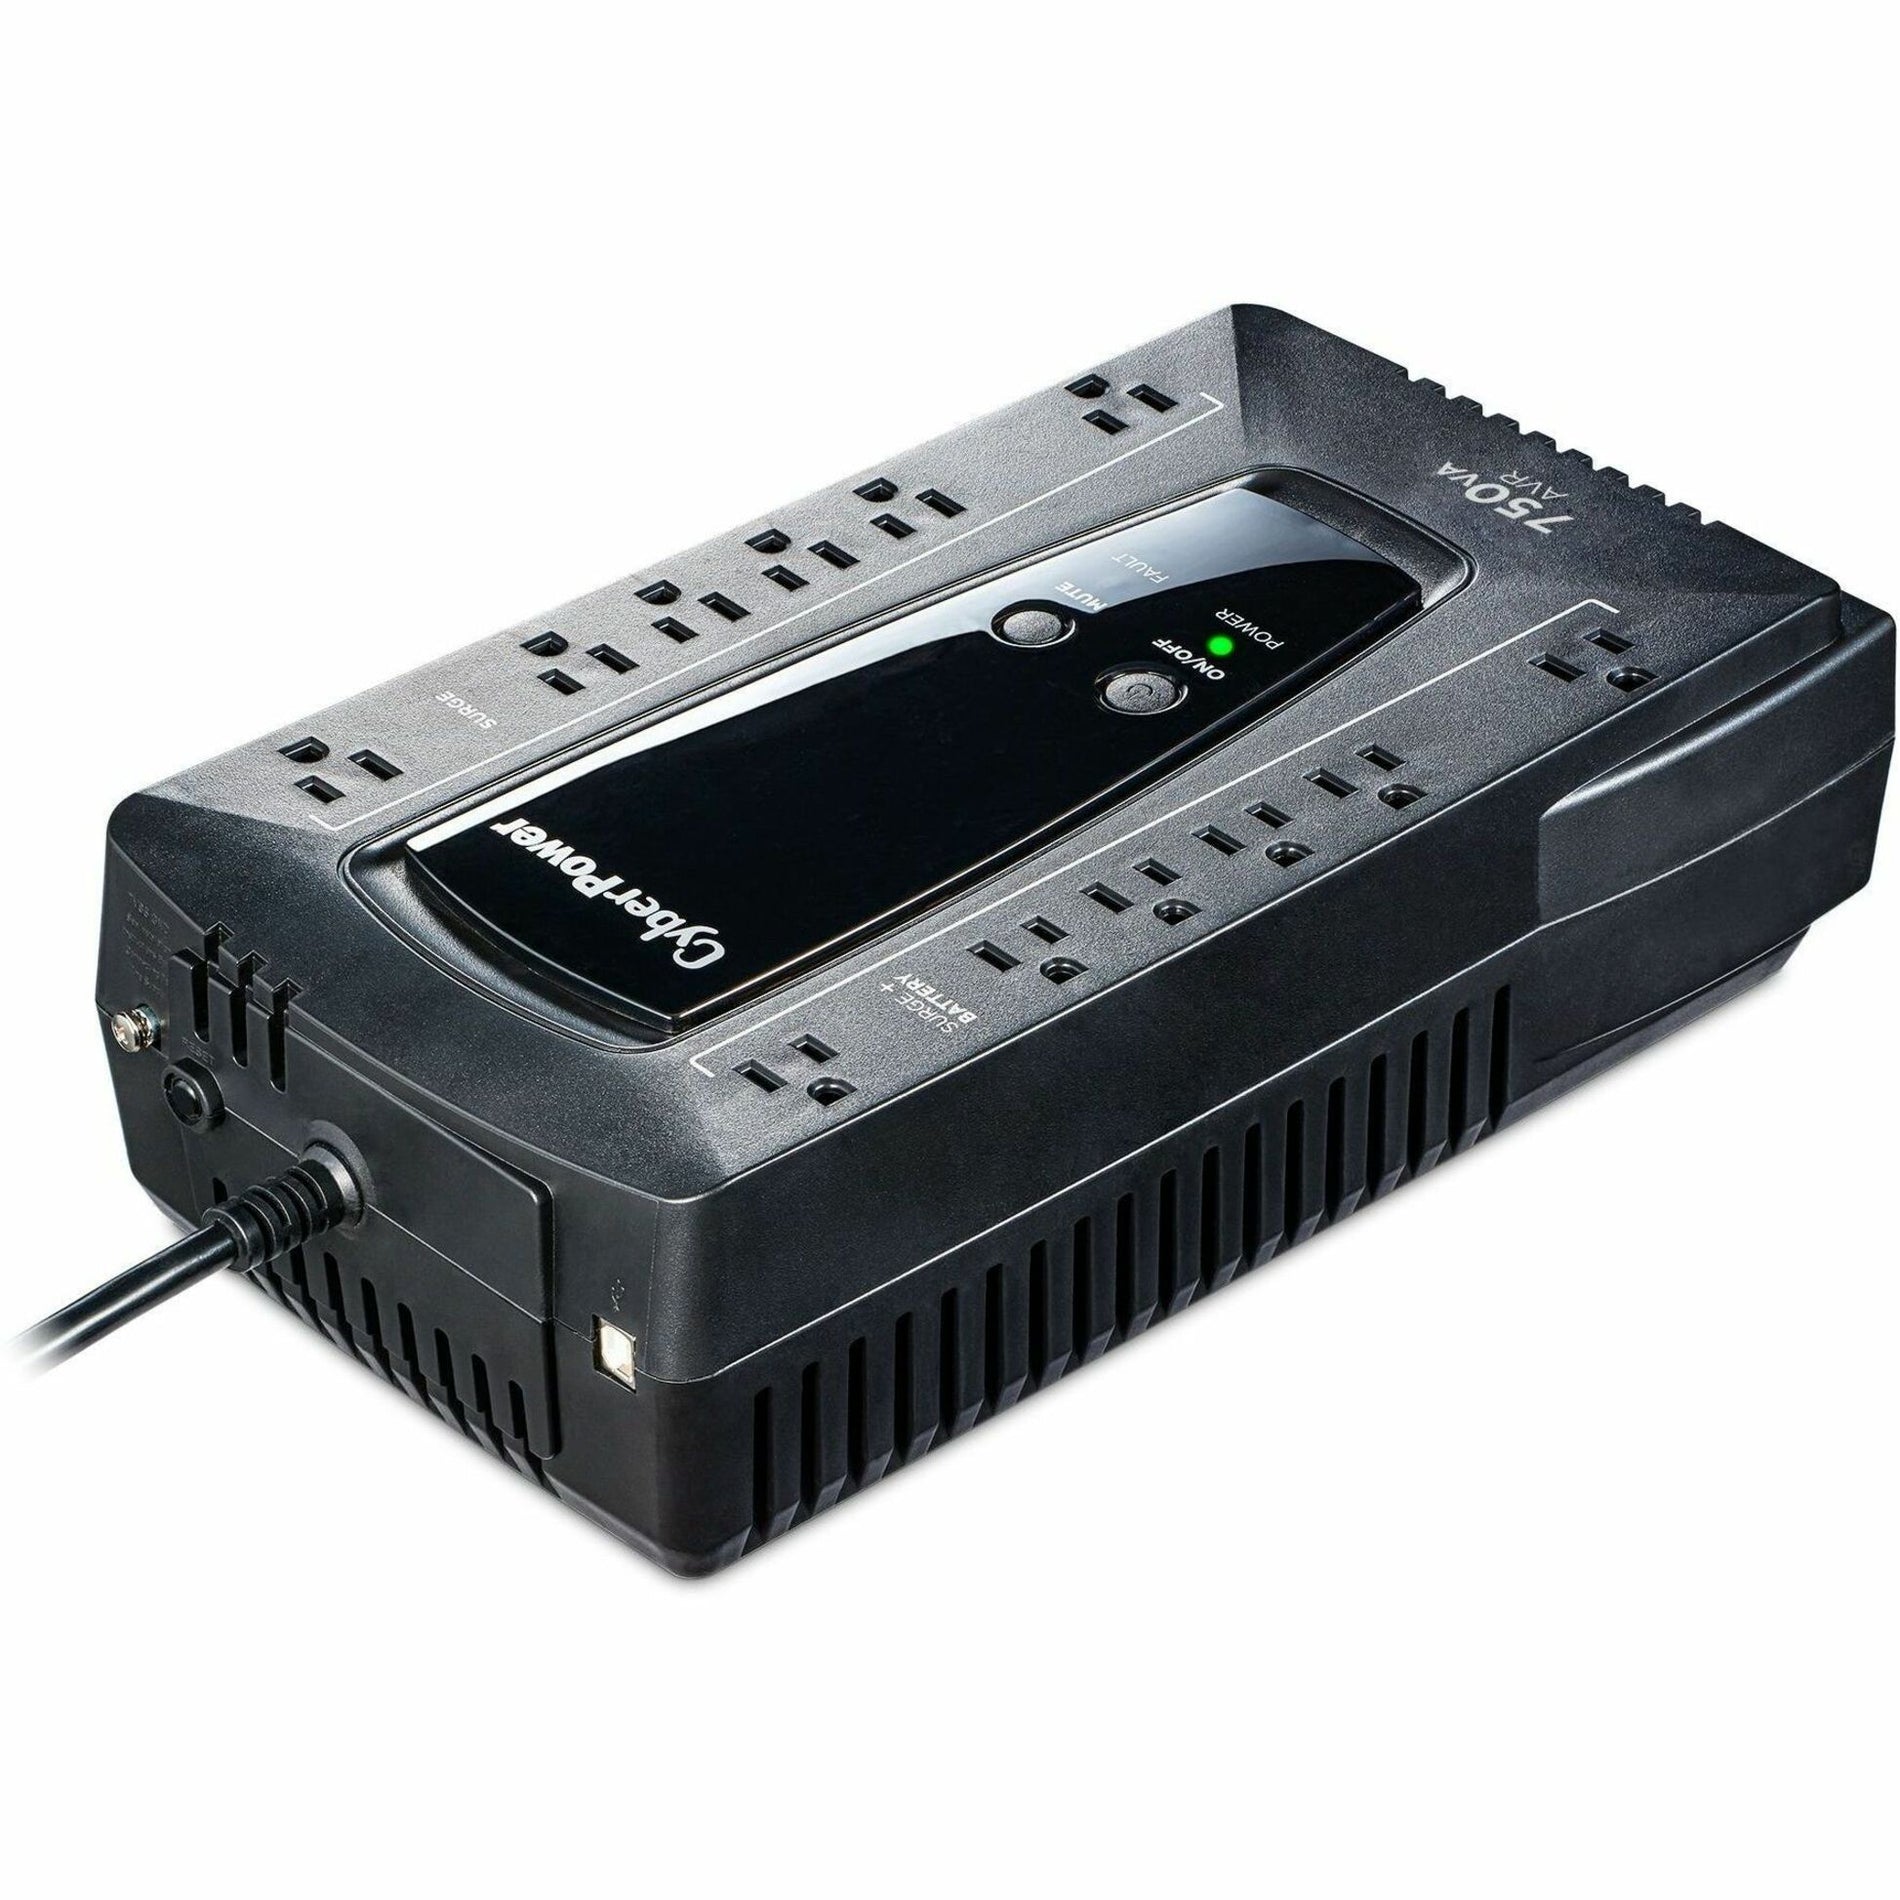 CyberPower AVRG750U AVR Series 750VA 450W Desktop UPS with USB, 3 Year Warranty, Low Battery Alarm